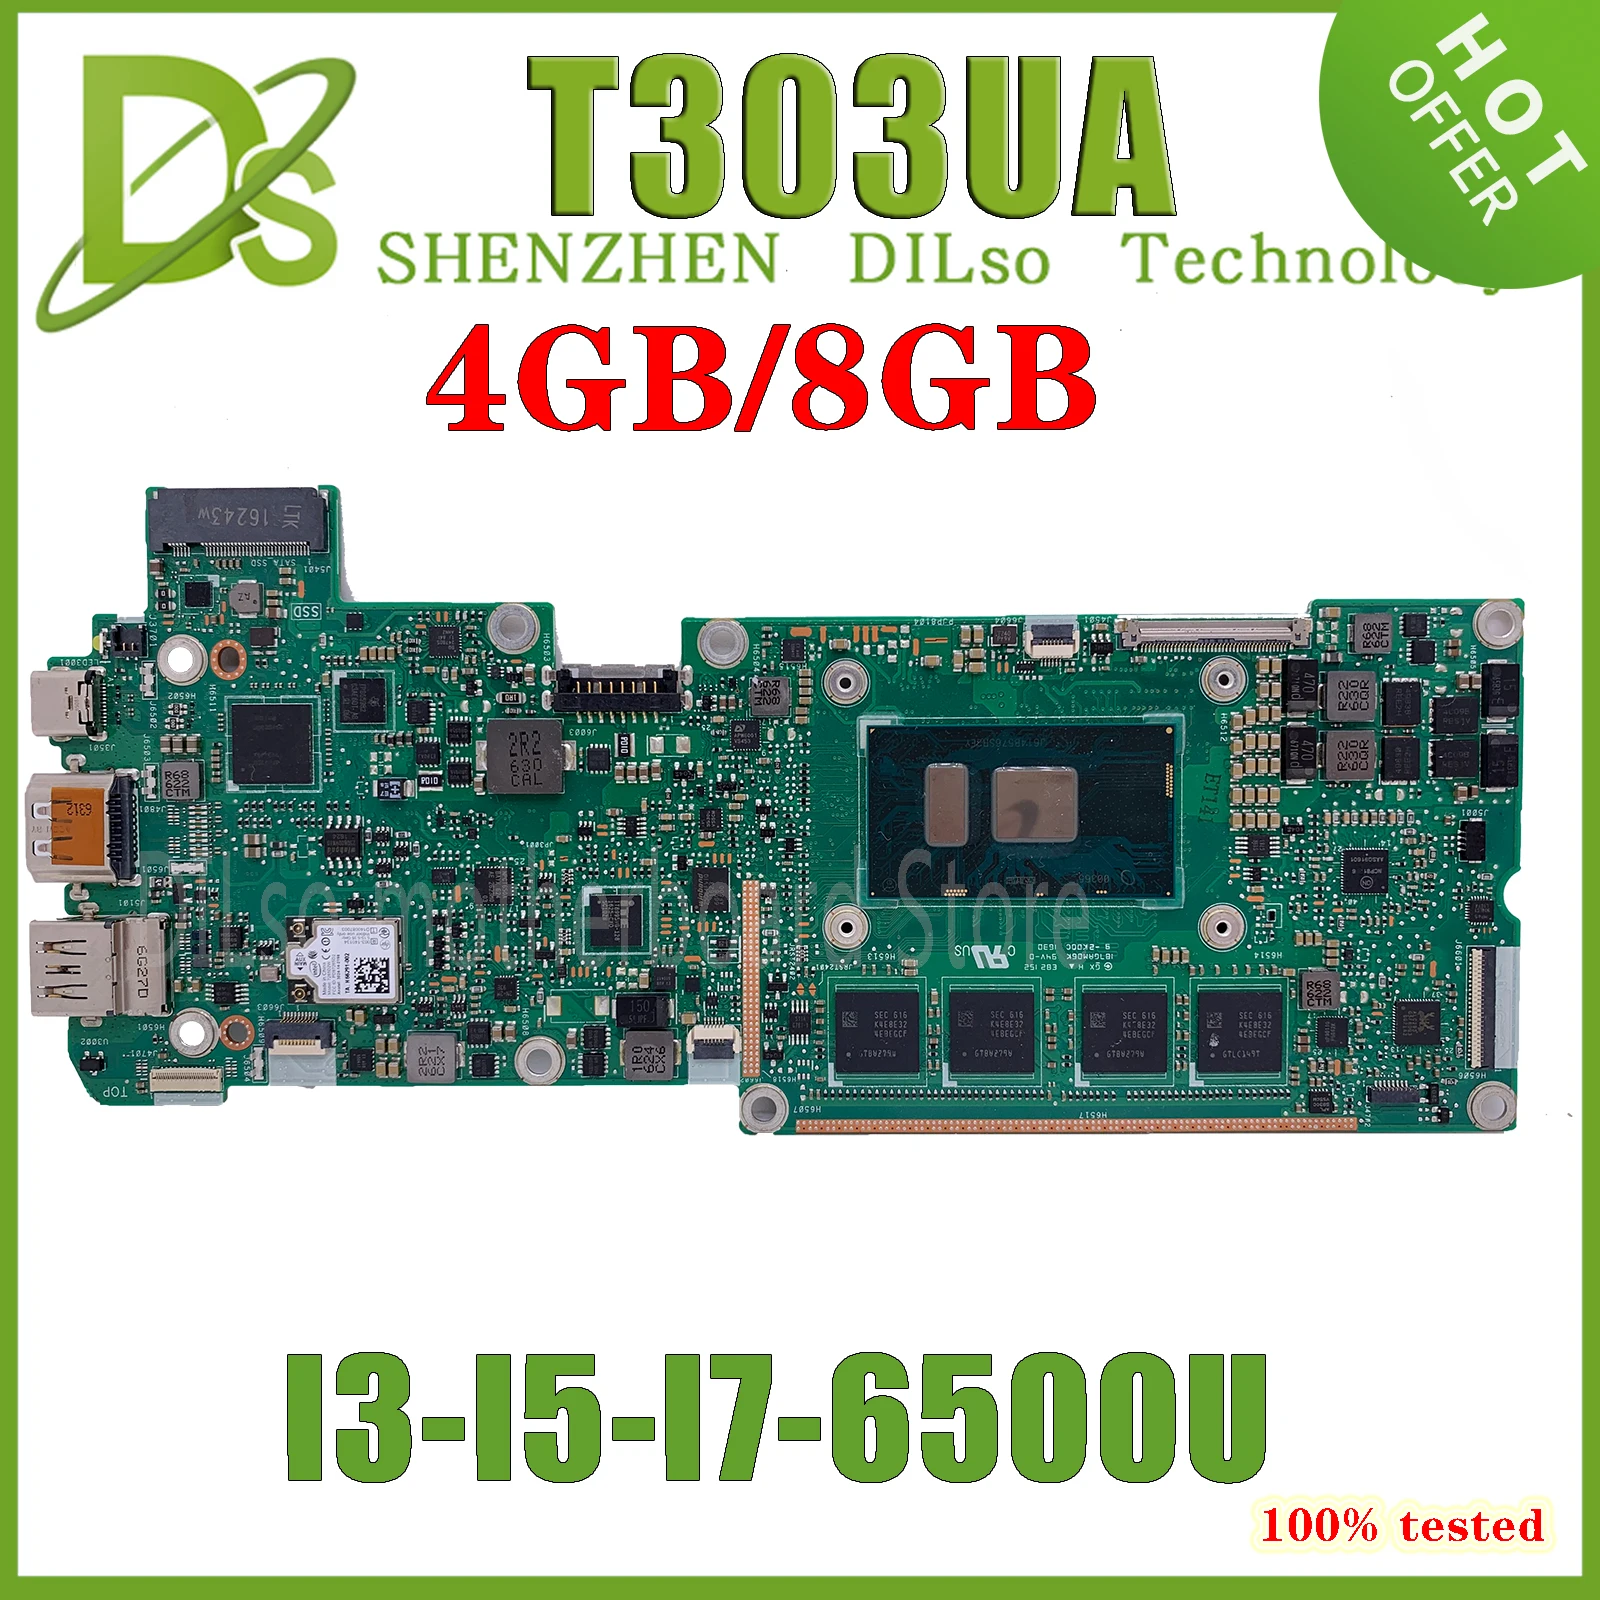 

KEFU T303UA Motherboard for ASUS Transformer 3 Pro T303 T303U With I5-6200U I7-6500U 4G/8GB-RAM 100% Fully Tested